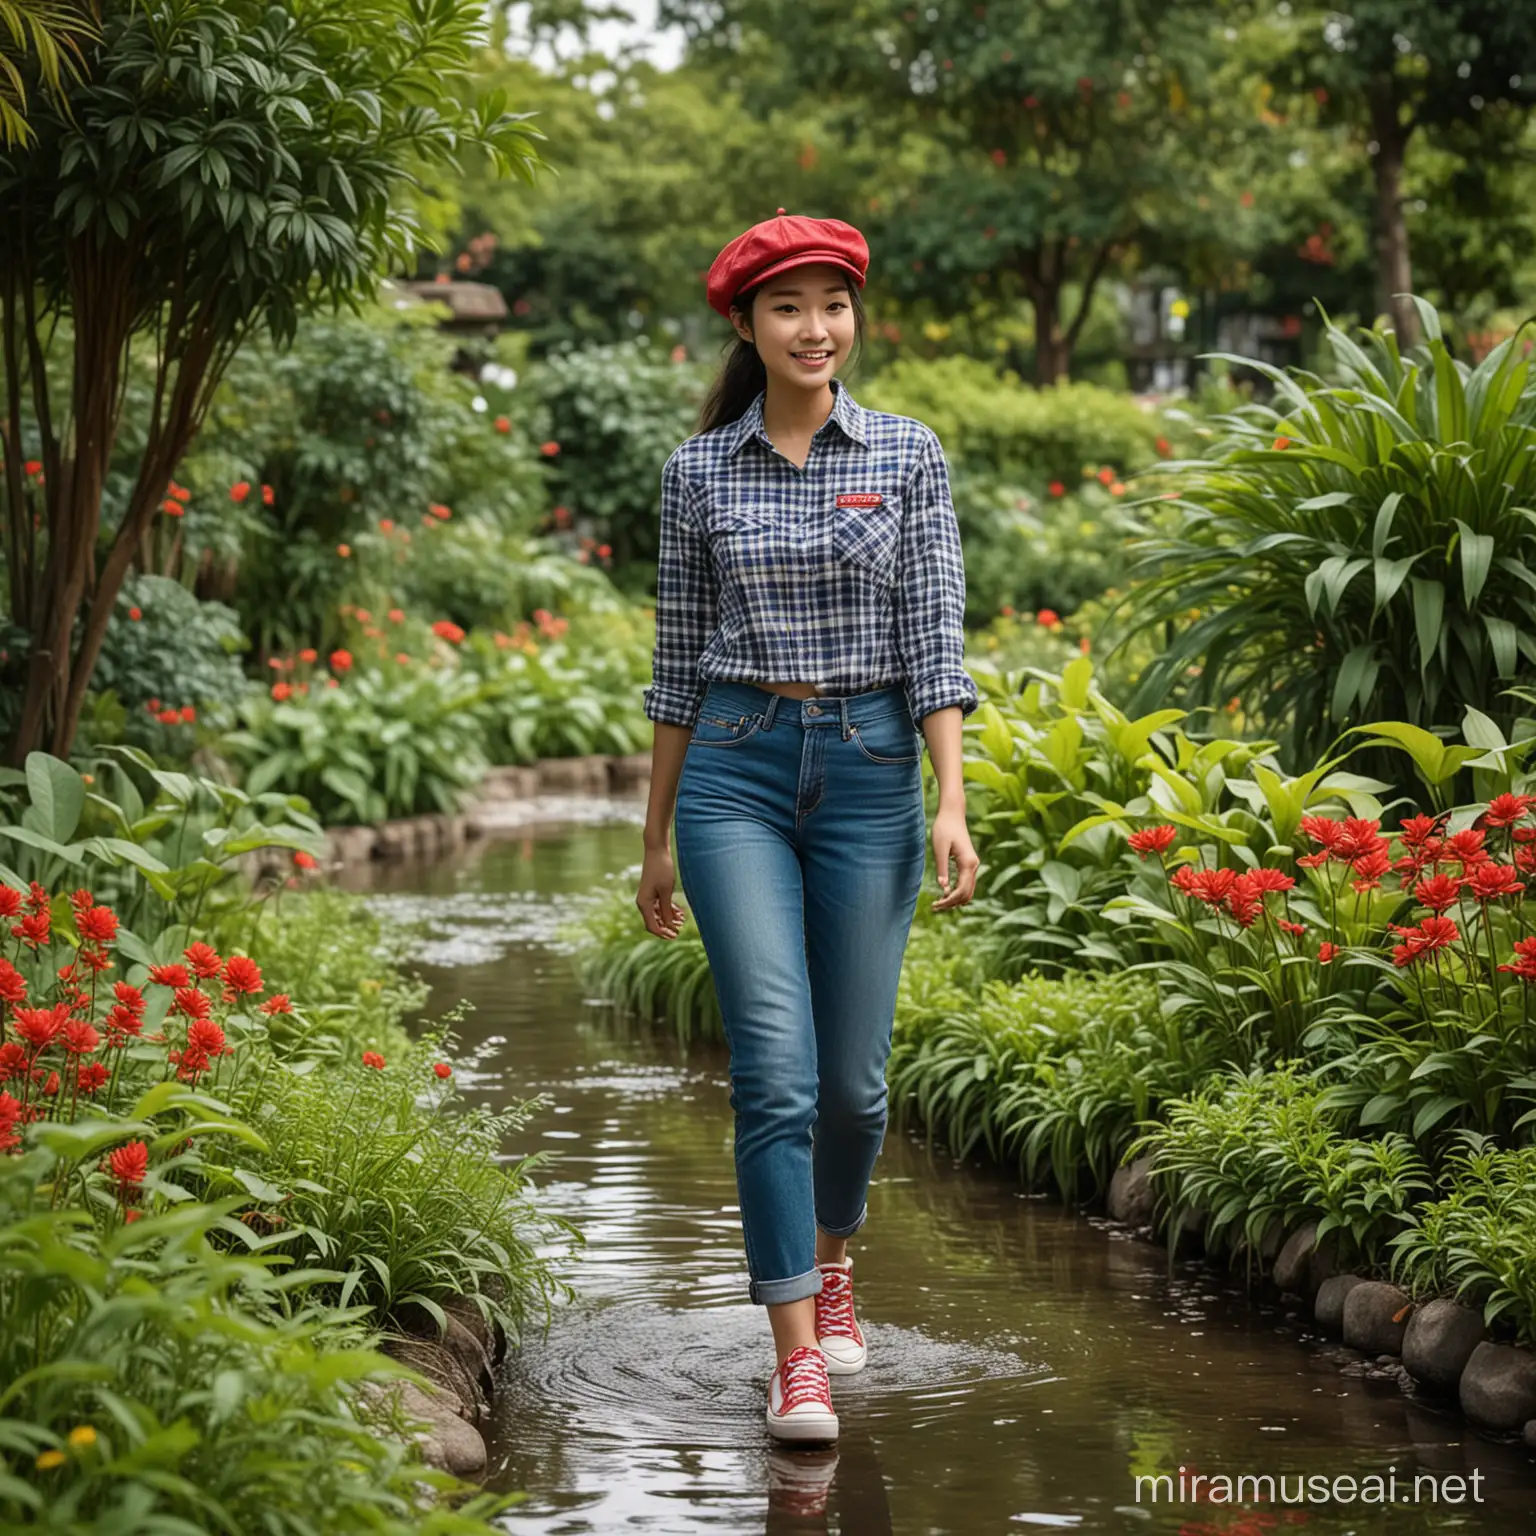 Stylish Asian Woman Strolling in Lush Park Garden